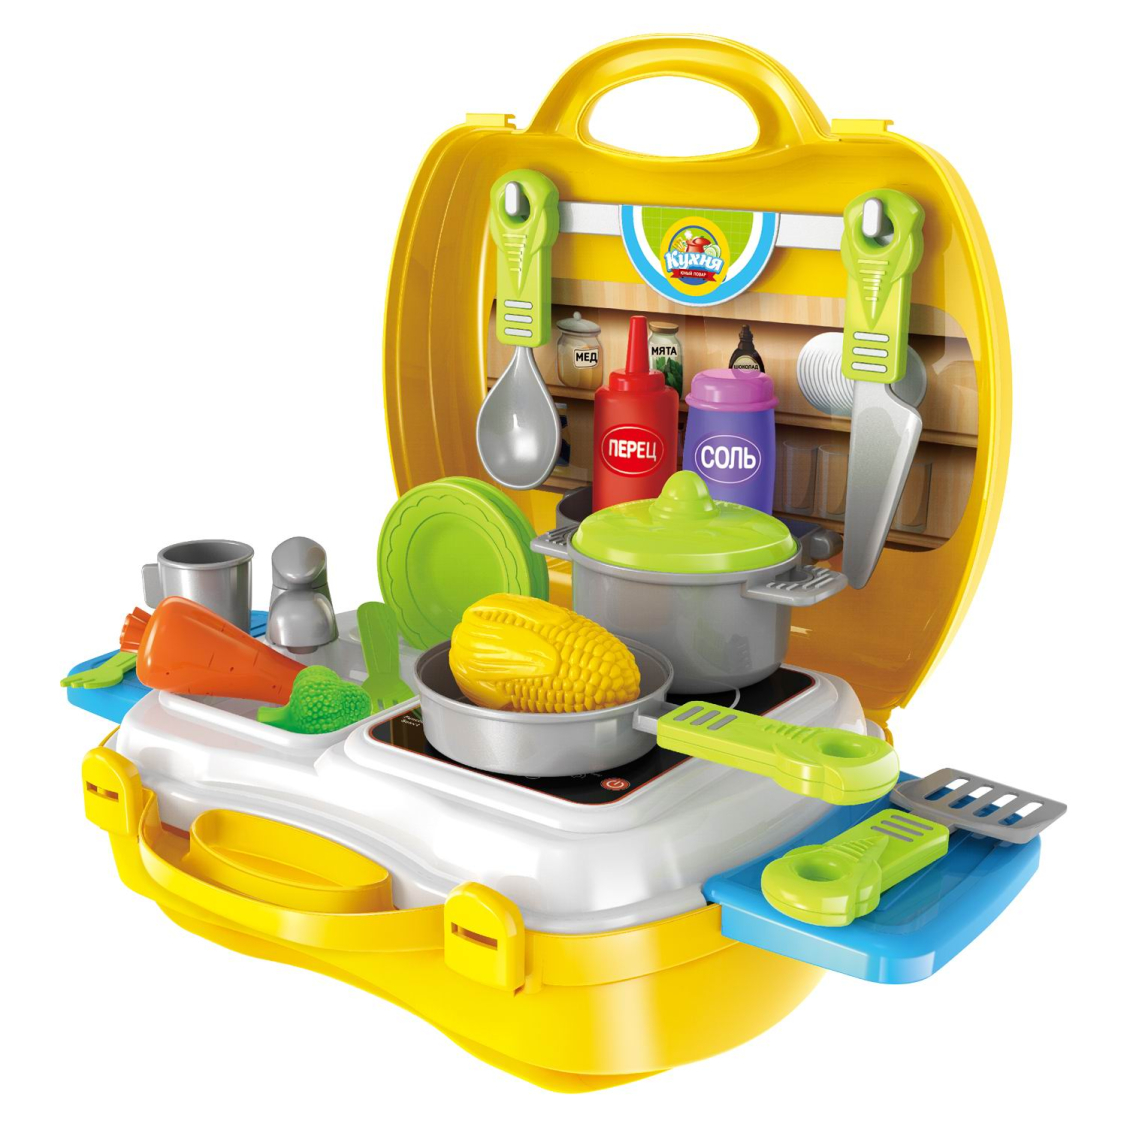 Kitchen Dream кухня детская 3568 Toys. Kitchen Cooking детская кухня чемоданчик. Игровой набор кухня Kitchen Cooking. Игровой набор Mini Kitchen супермаркет 623204.